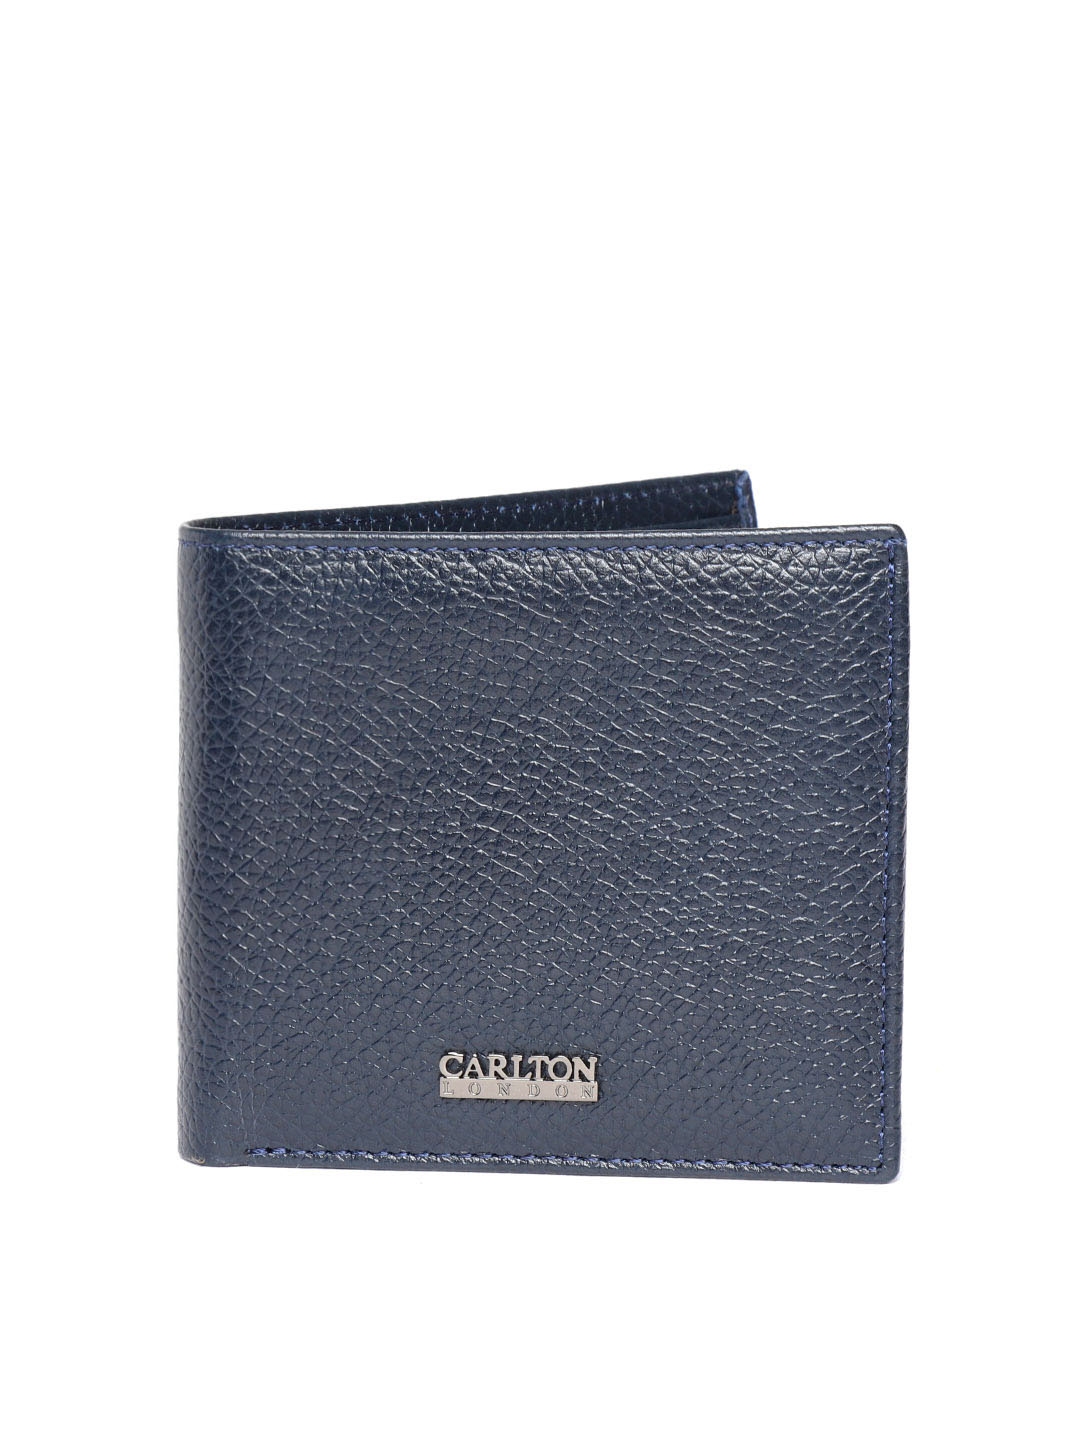 Buy Carlton London Men Navy Blue Solid Leather Two Fold Wallet ...